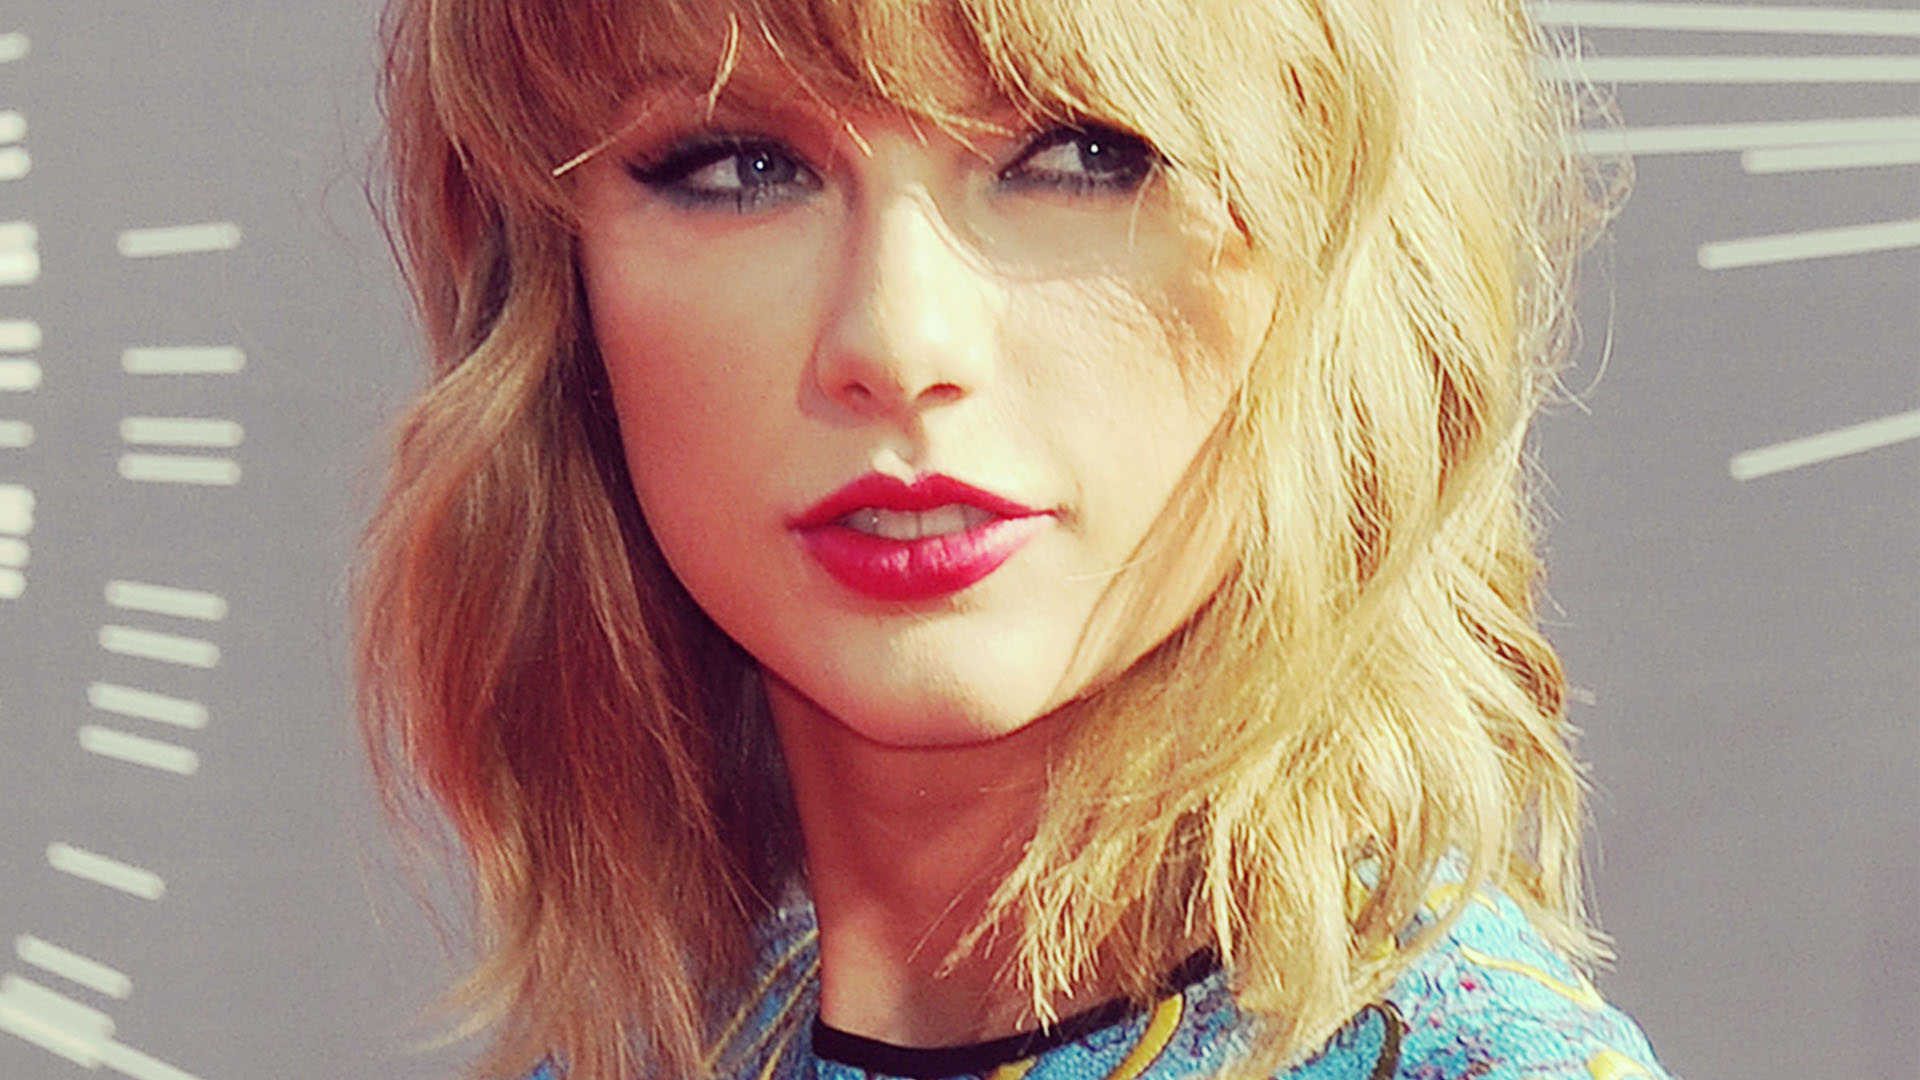 Taylor-Swift-Face-Closeup-Wallpaper-HD-2015.jpg